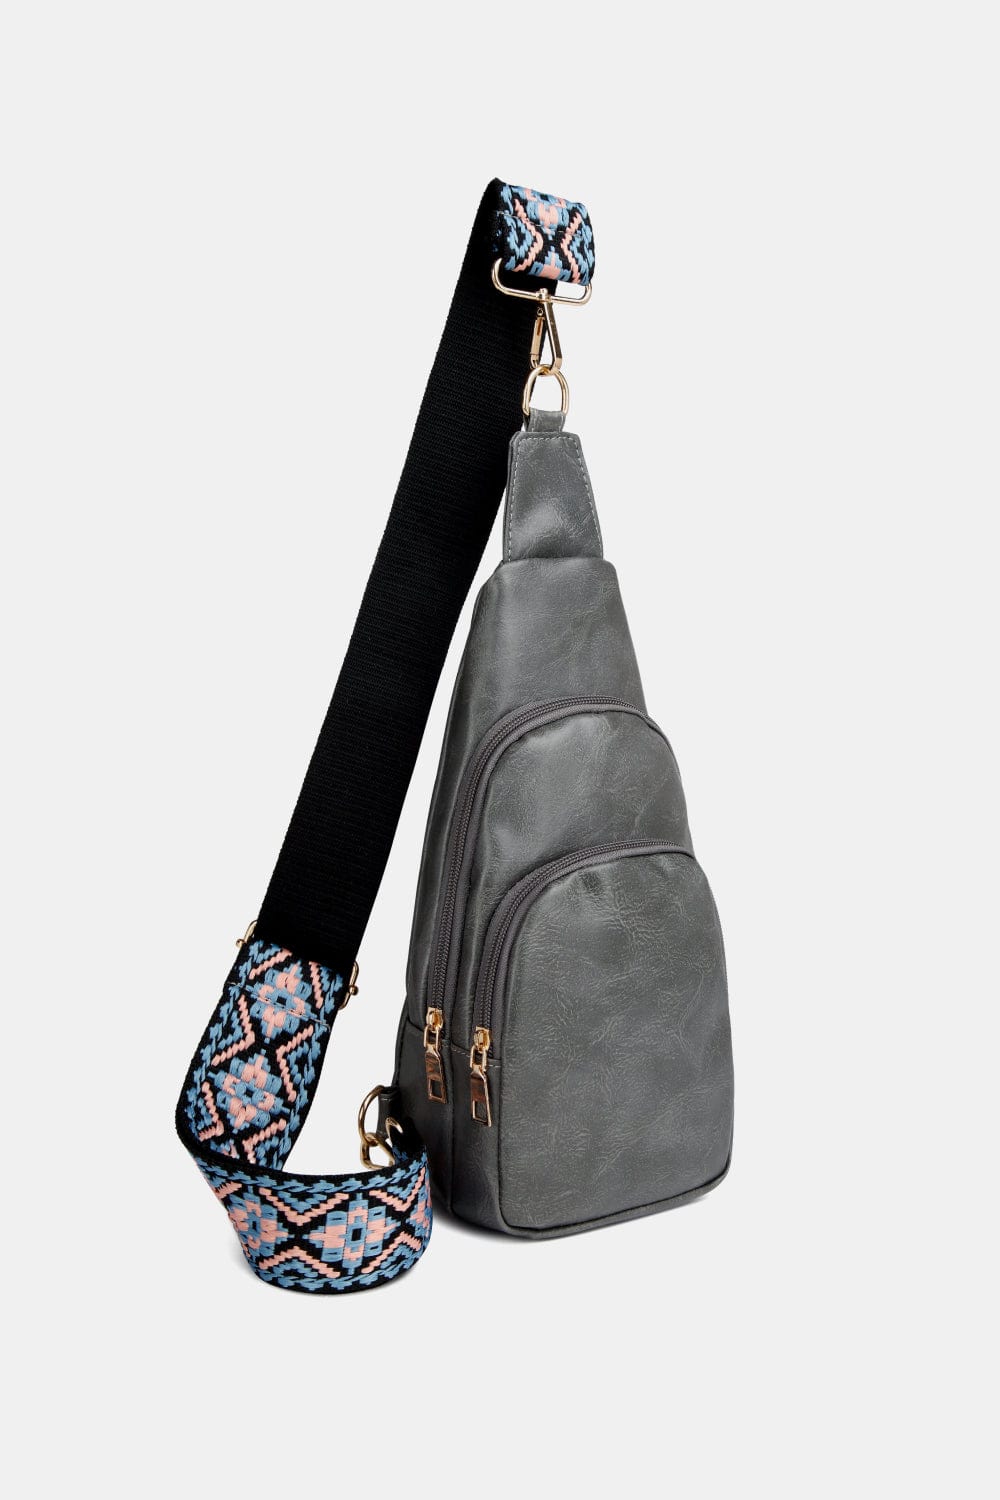 The802Gypsy Handbags, Wallets & Cases GYPSY-Syled Sling Bag